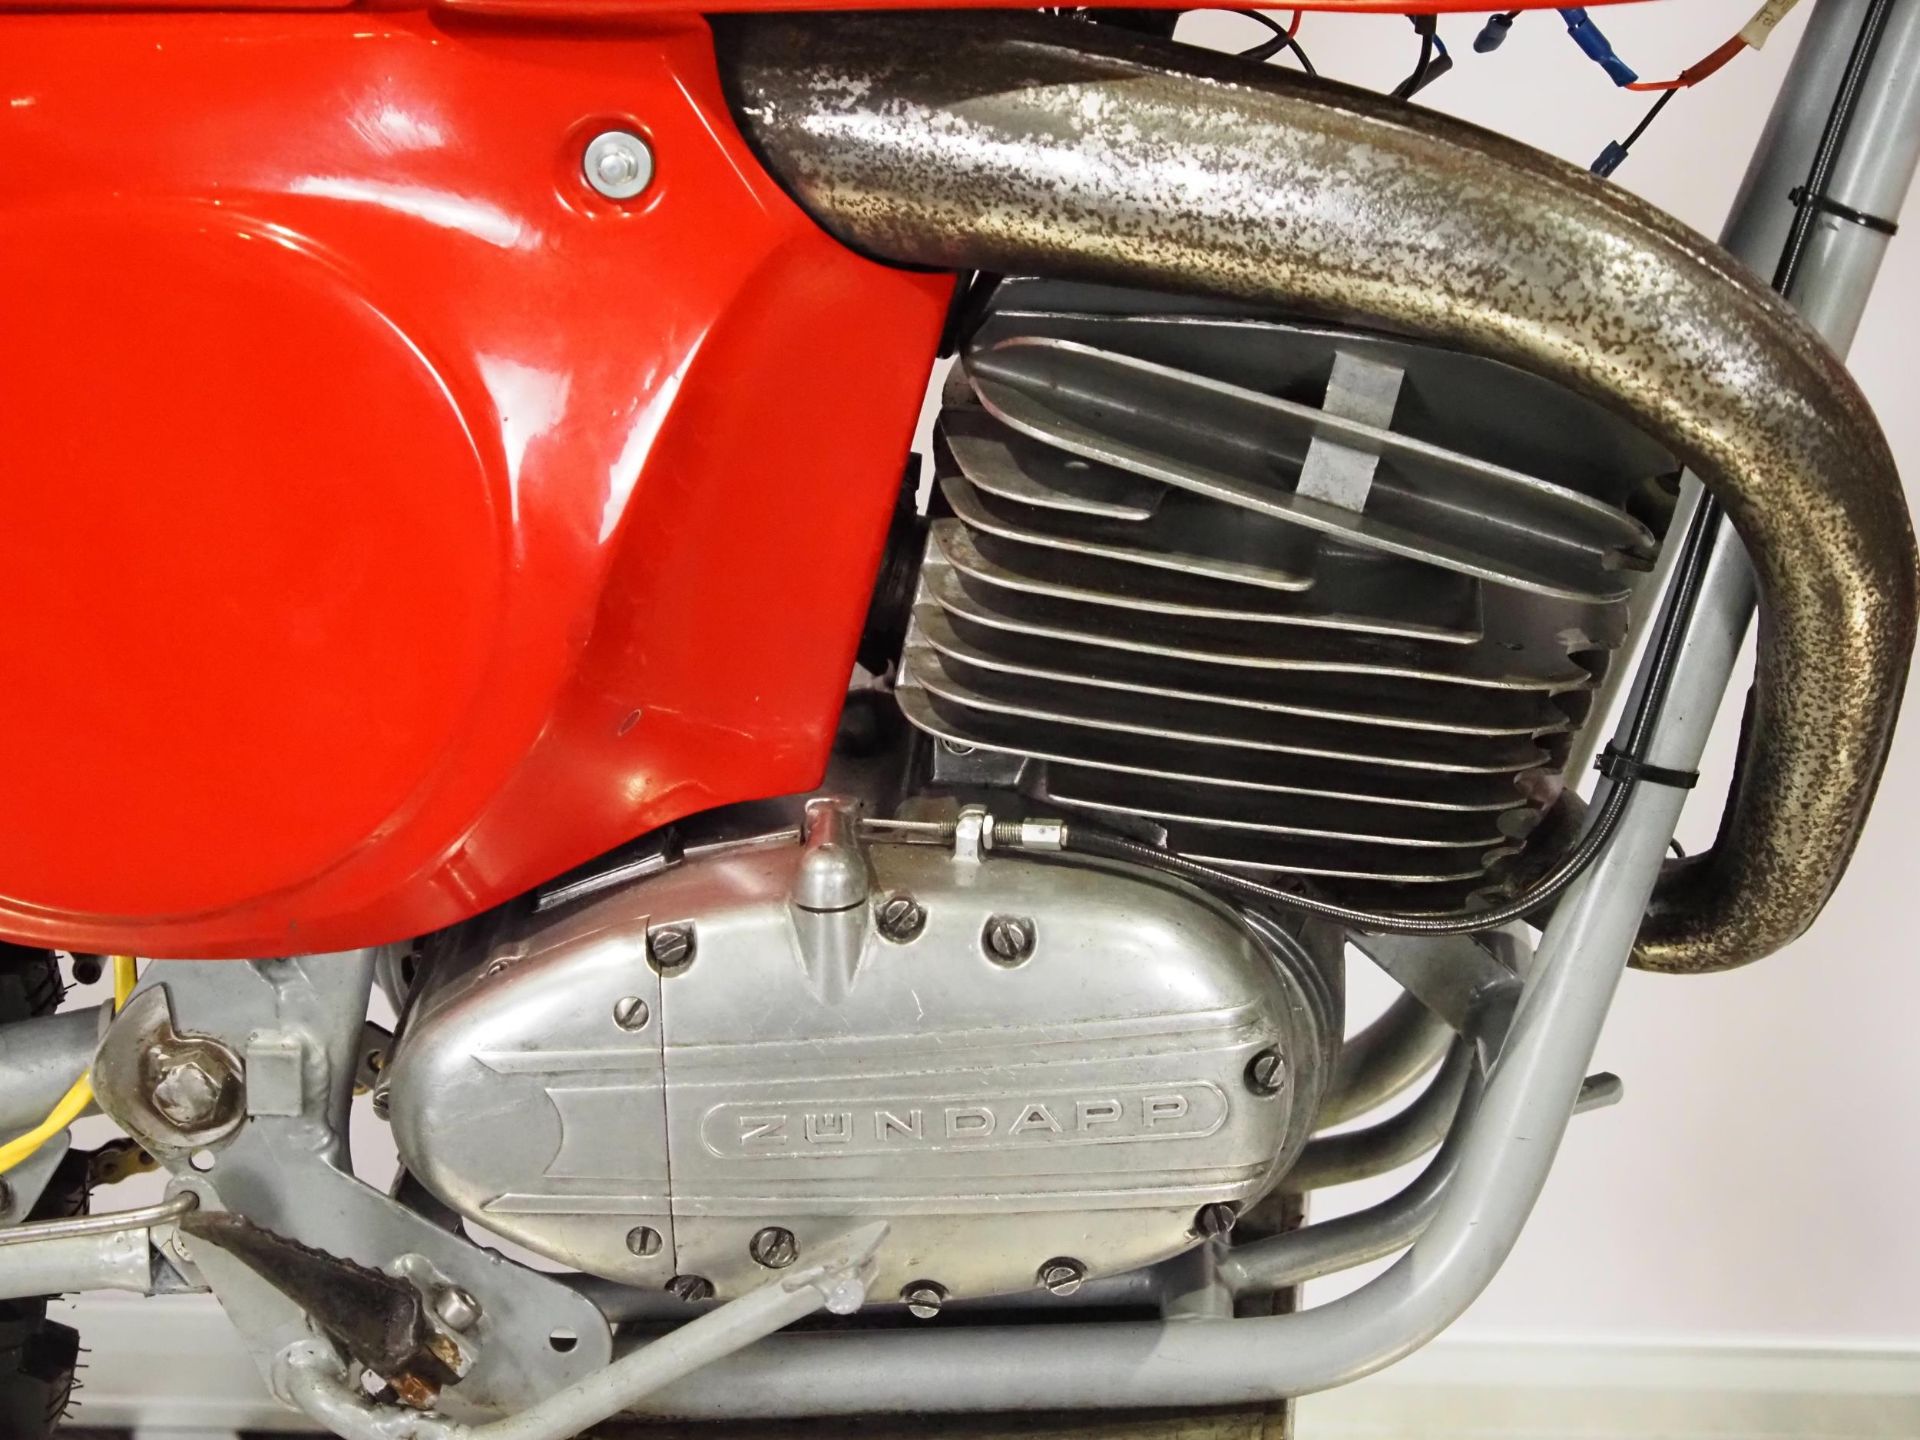 Rickman Metisse Zundap trials motorcycle. 1975. 175cc Engine No. 4648327 Runs and last ridden in - Image 4 of 9